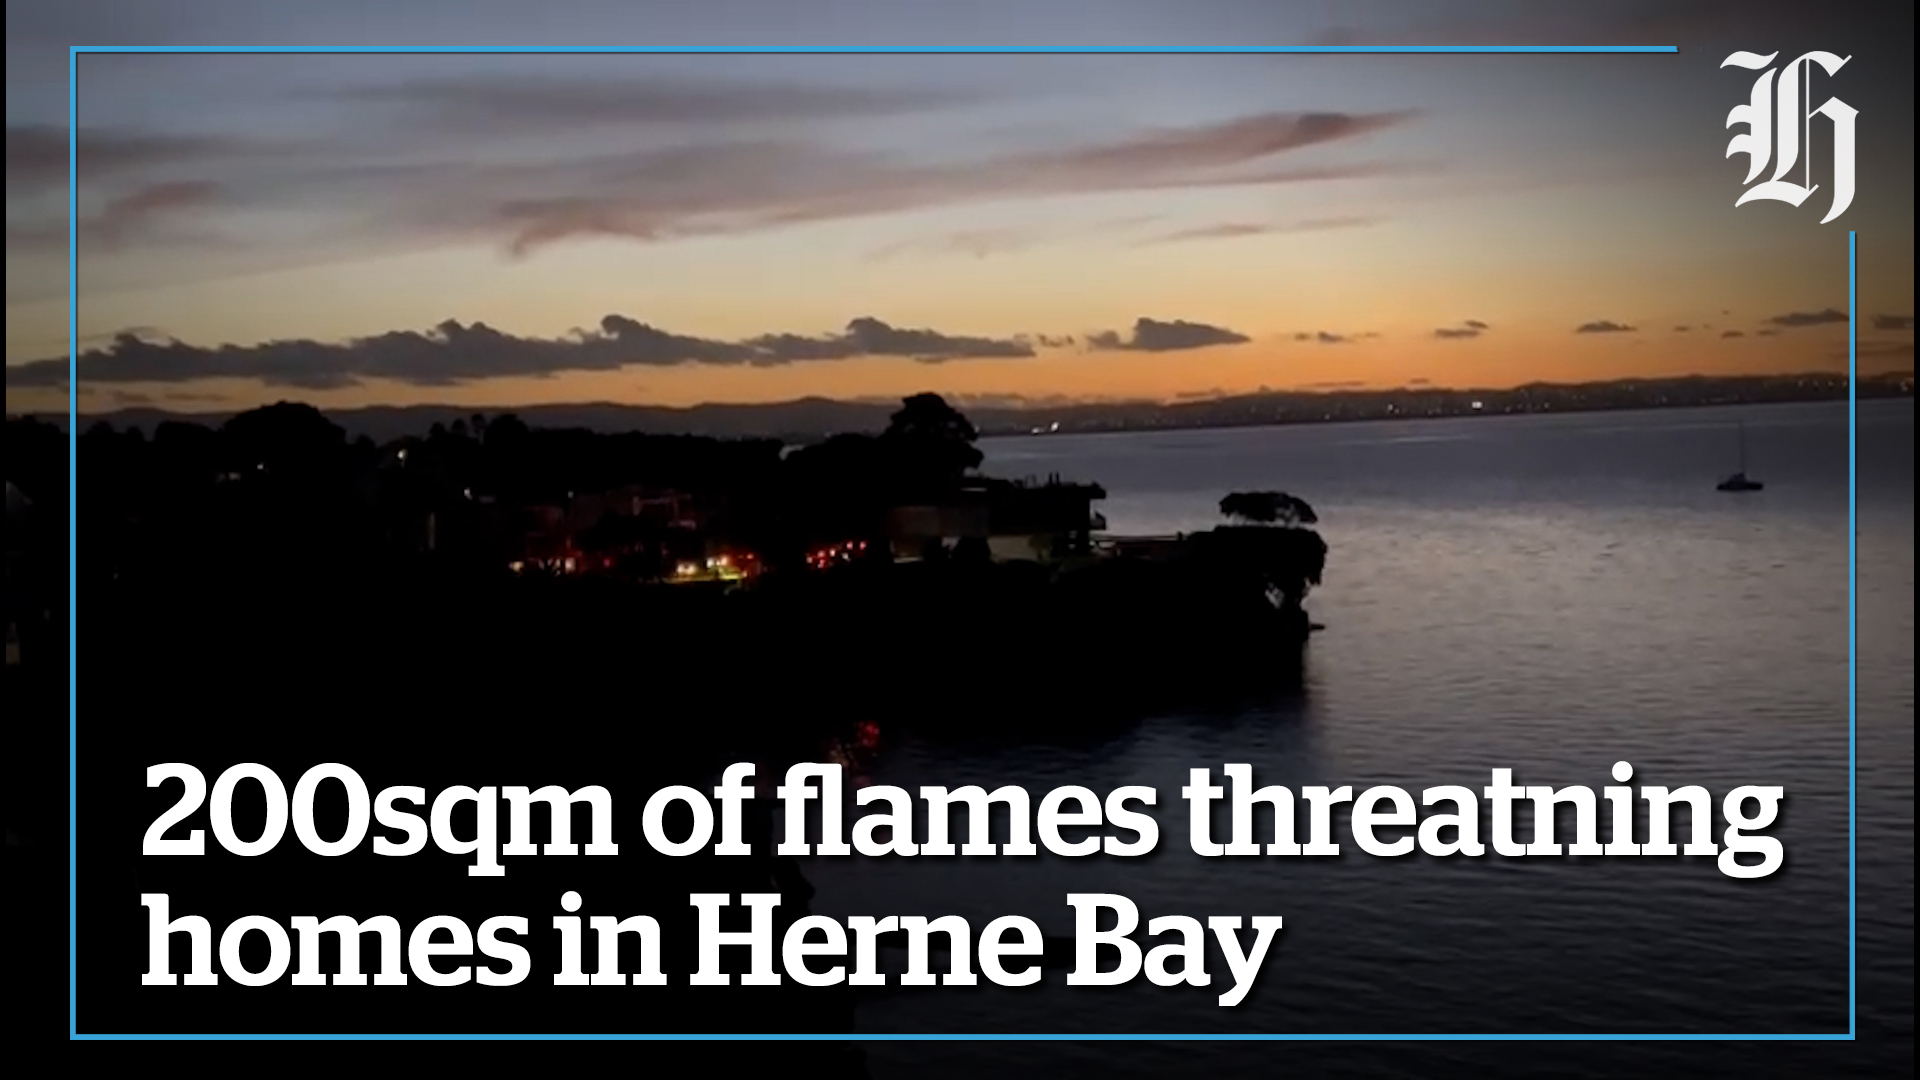 Fire crews battling 200sq m scrub blaze in Herne Bay near multi-million dollar homes photo